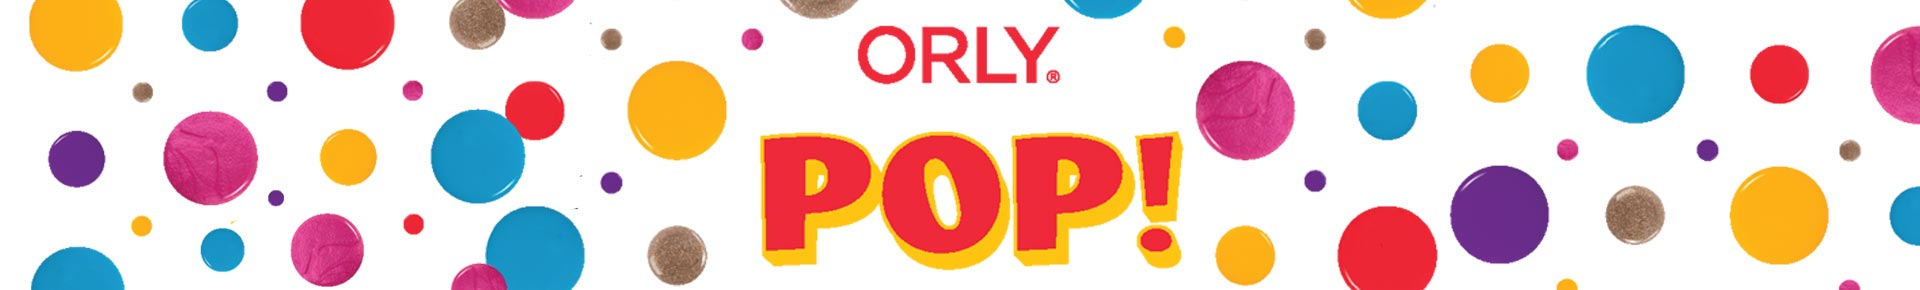 ORLY POP